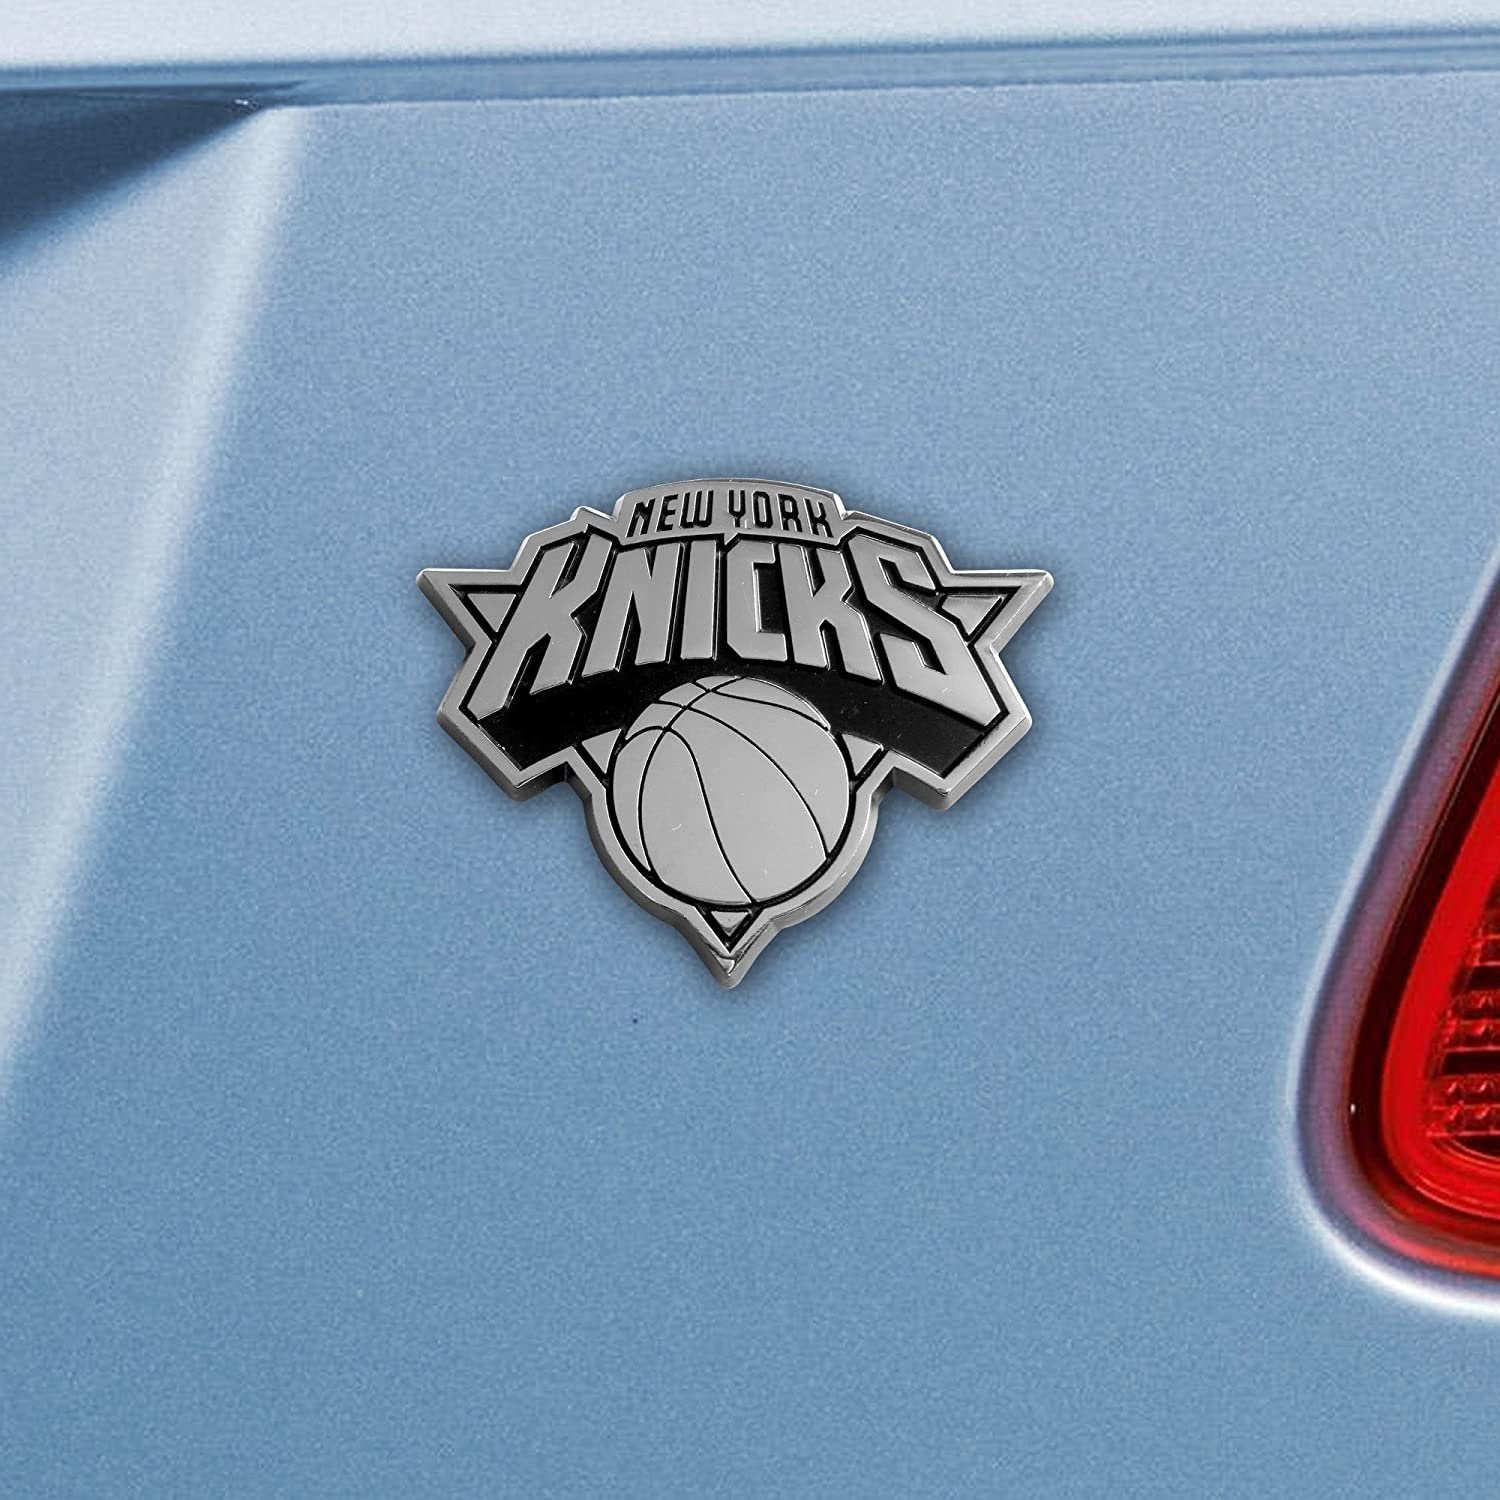 New York Knicks Premium Solid Metal Raised Auto Emblem, Shape Cut, Adhesive Backing